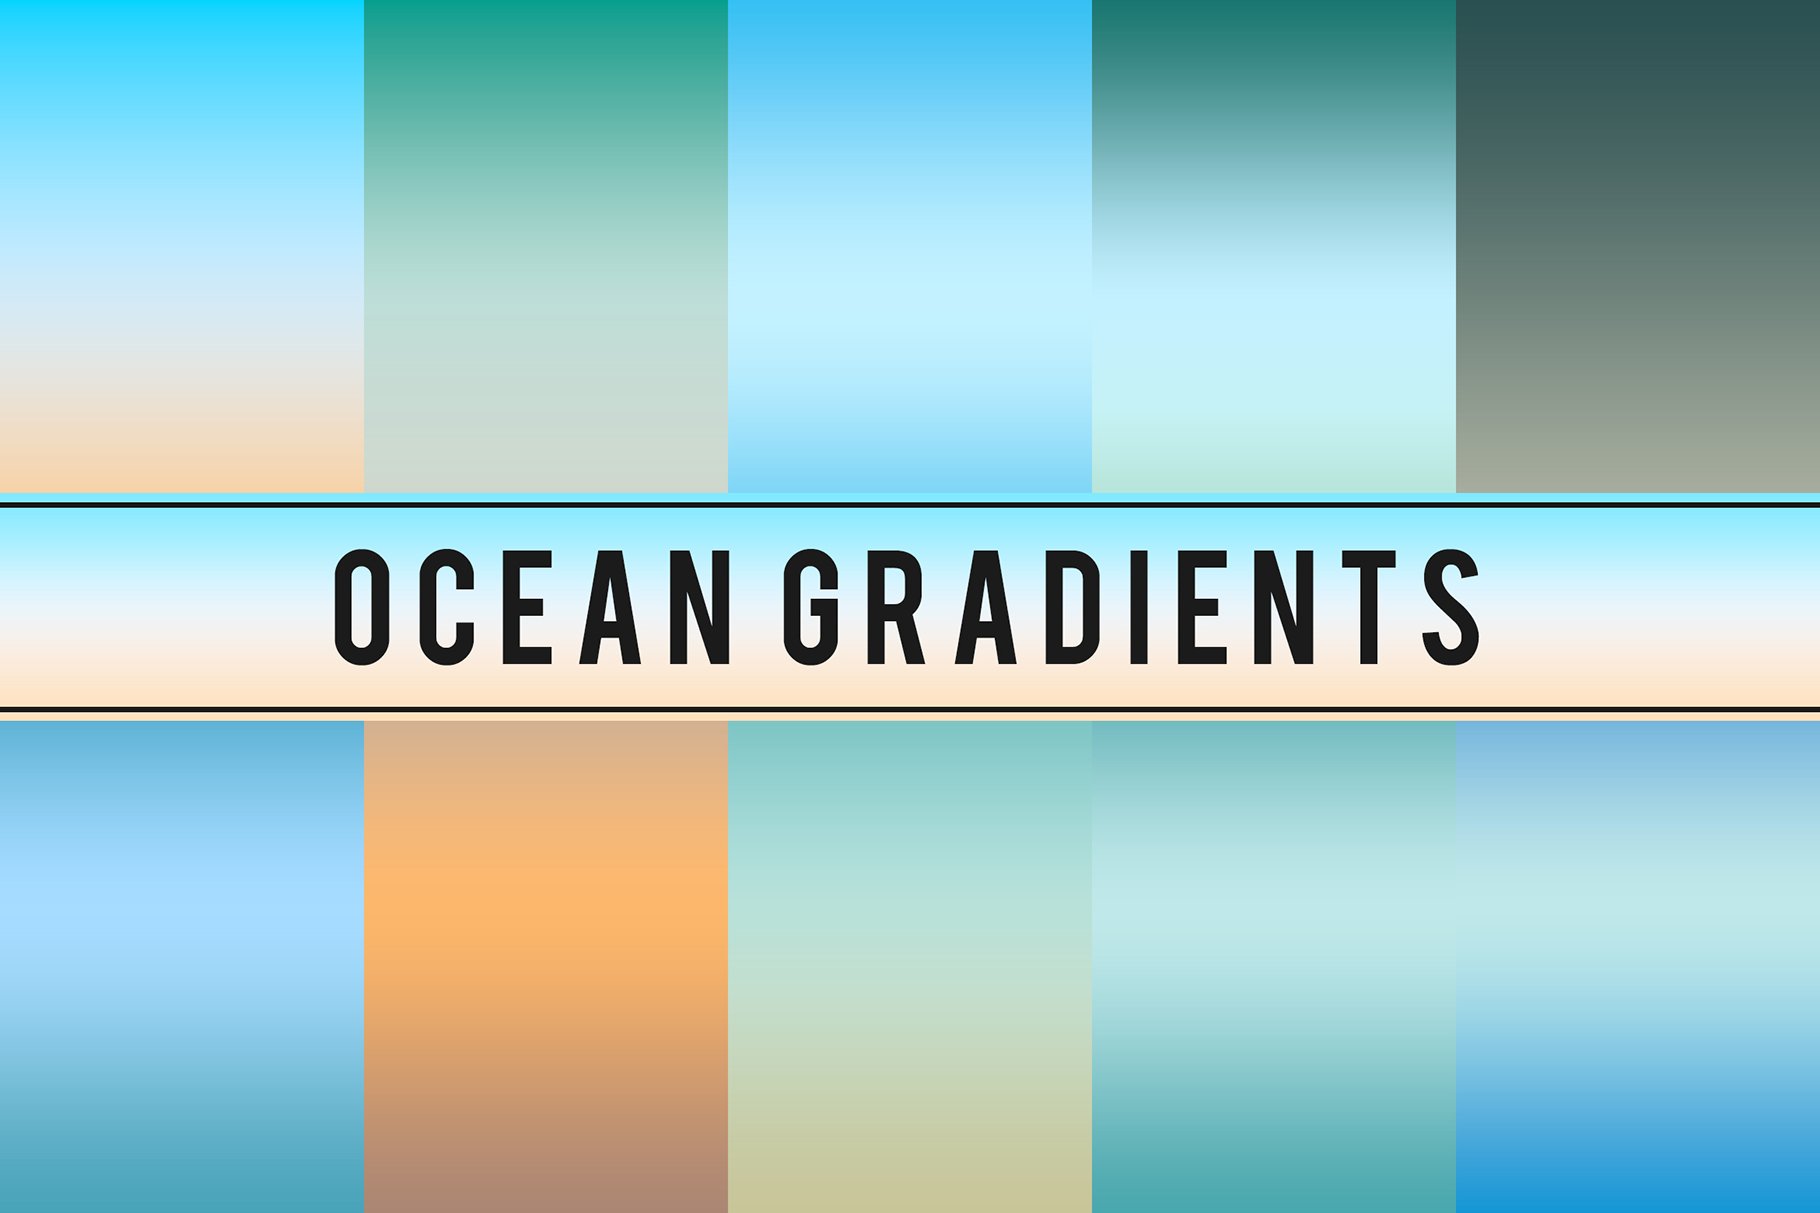 Ocean Gradients cover image.